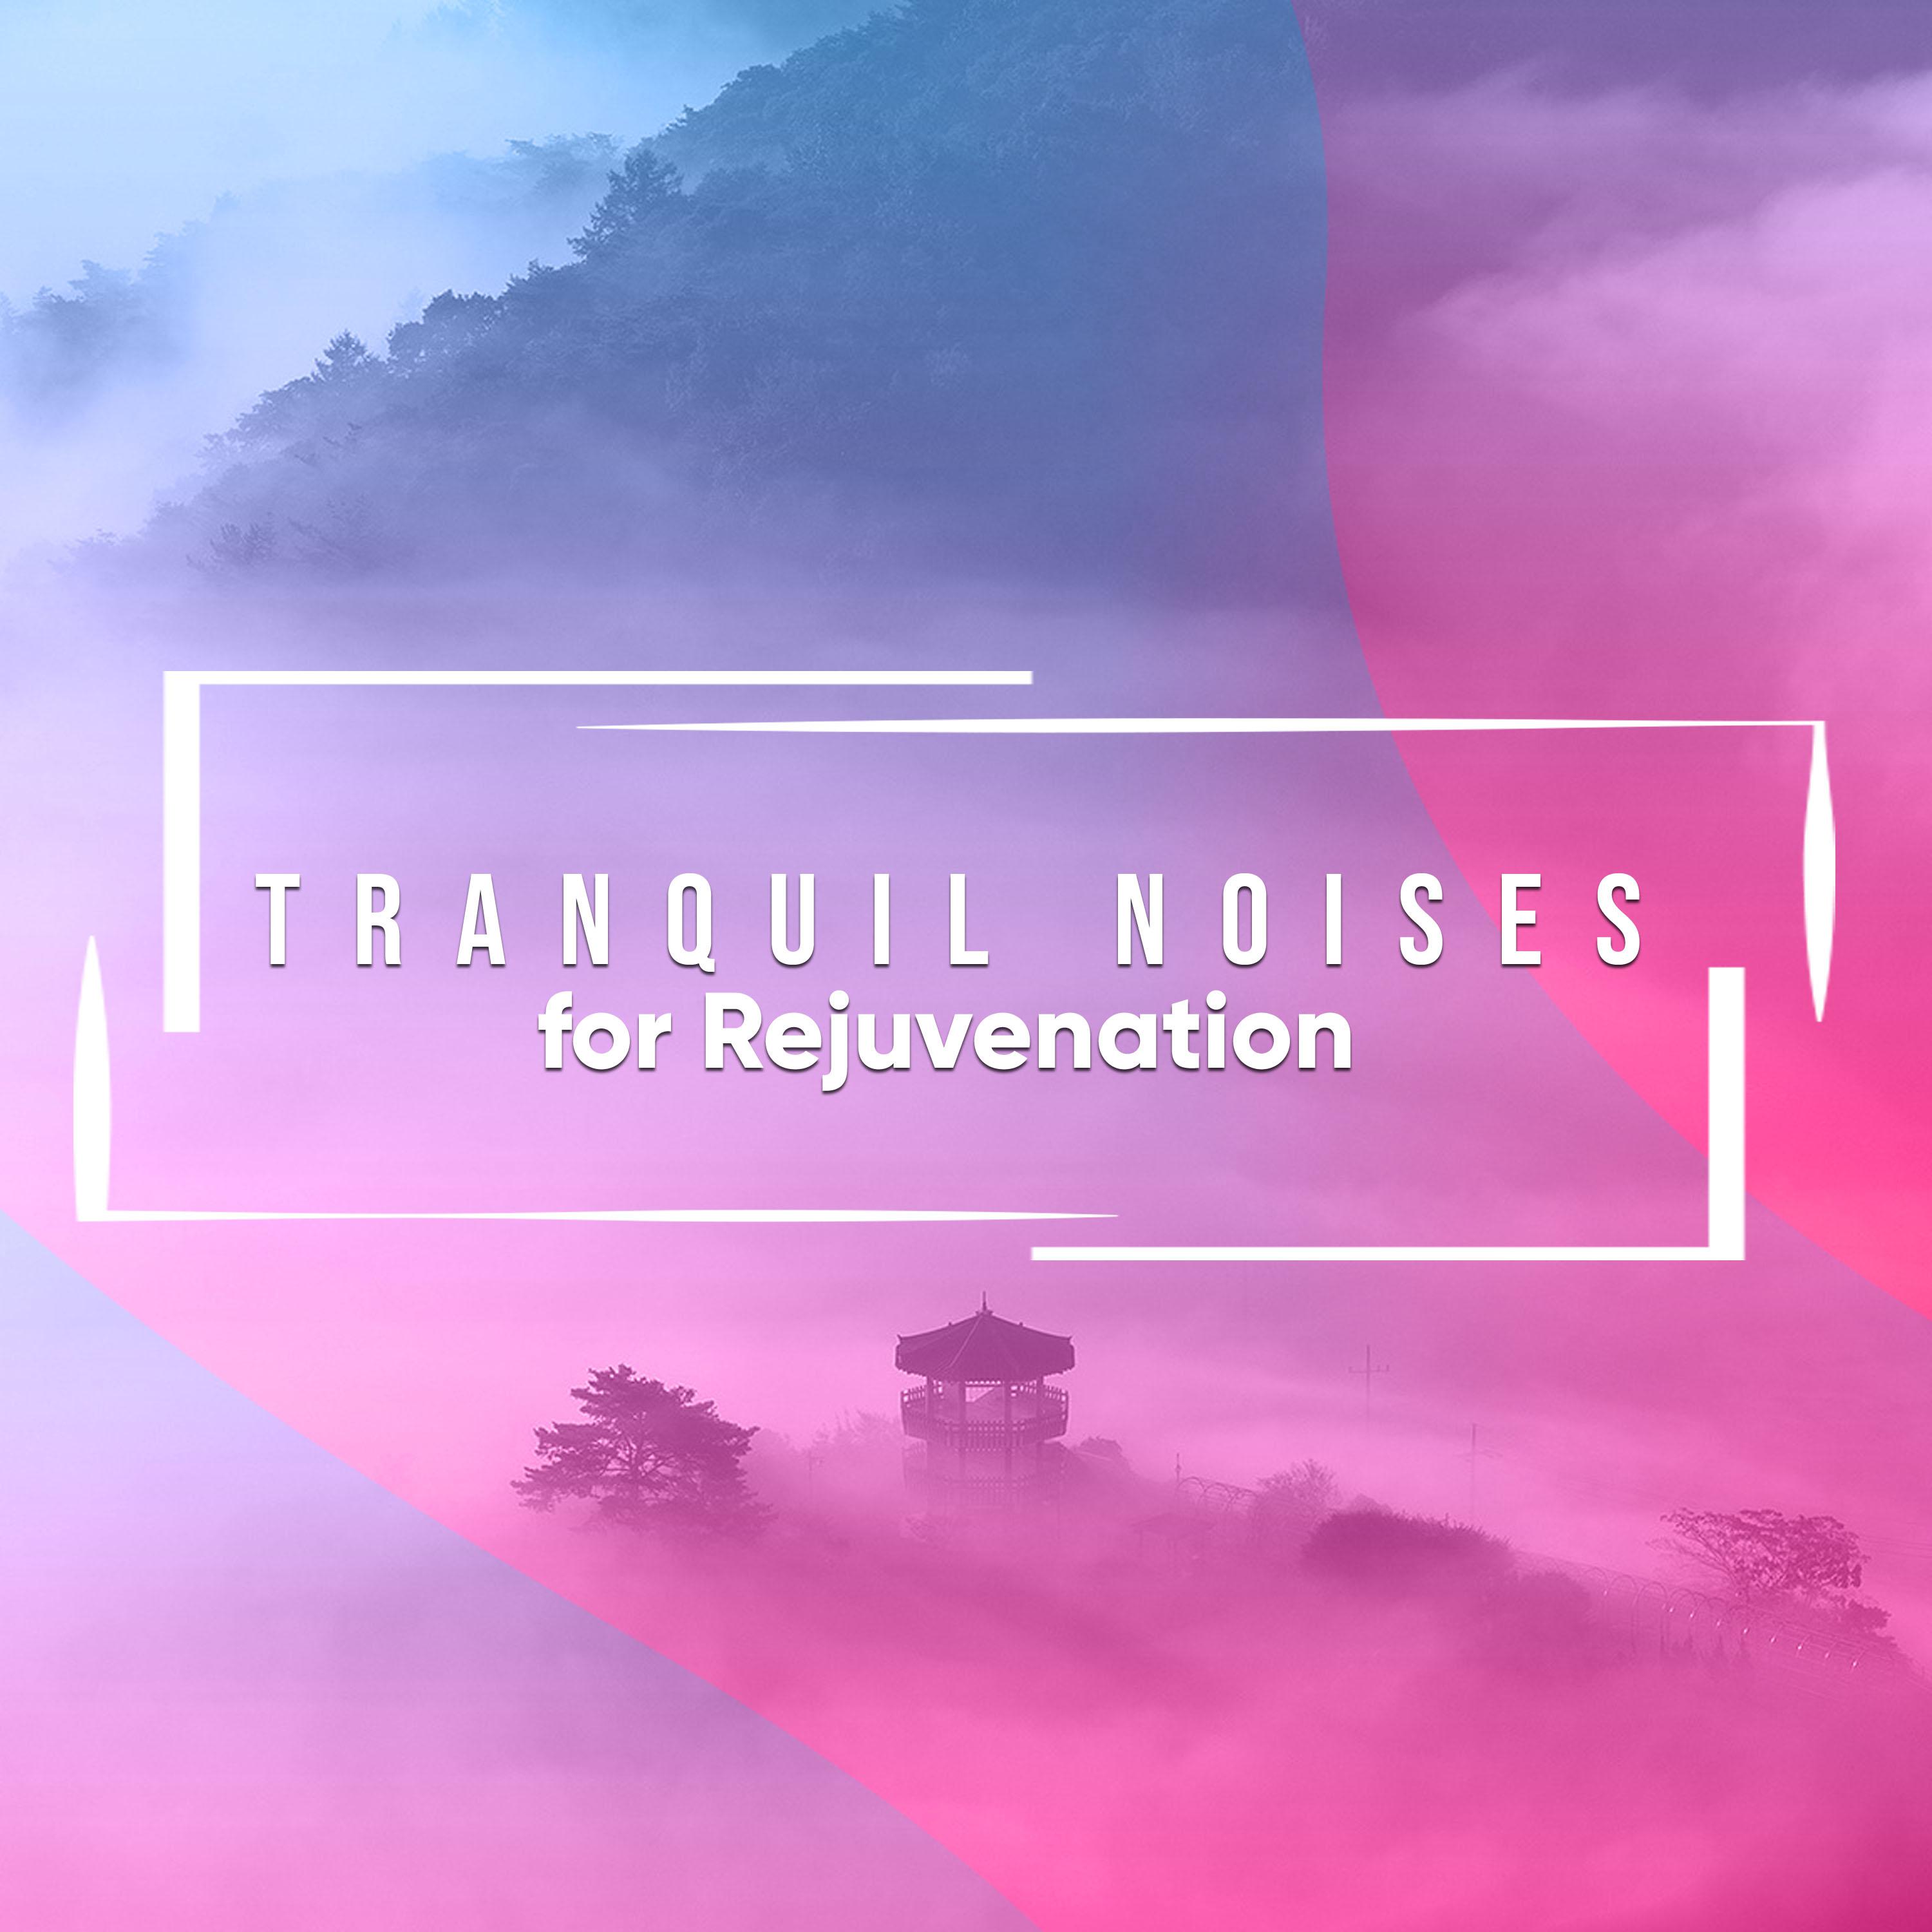 21 Tranquil Noises for Rejuvenation